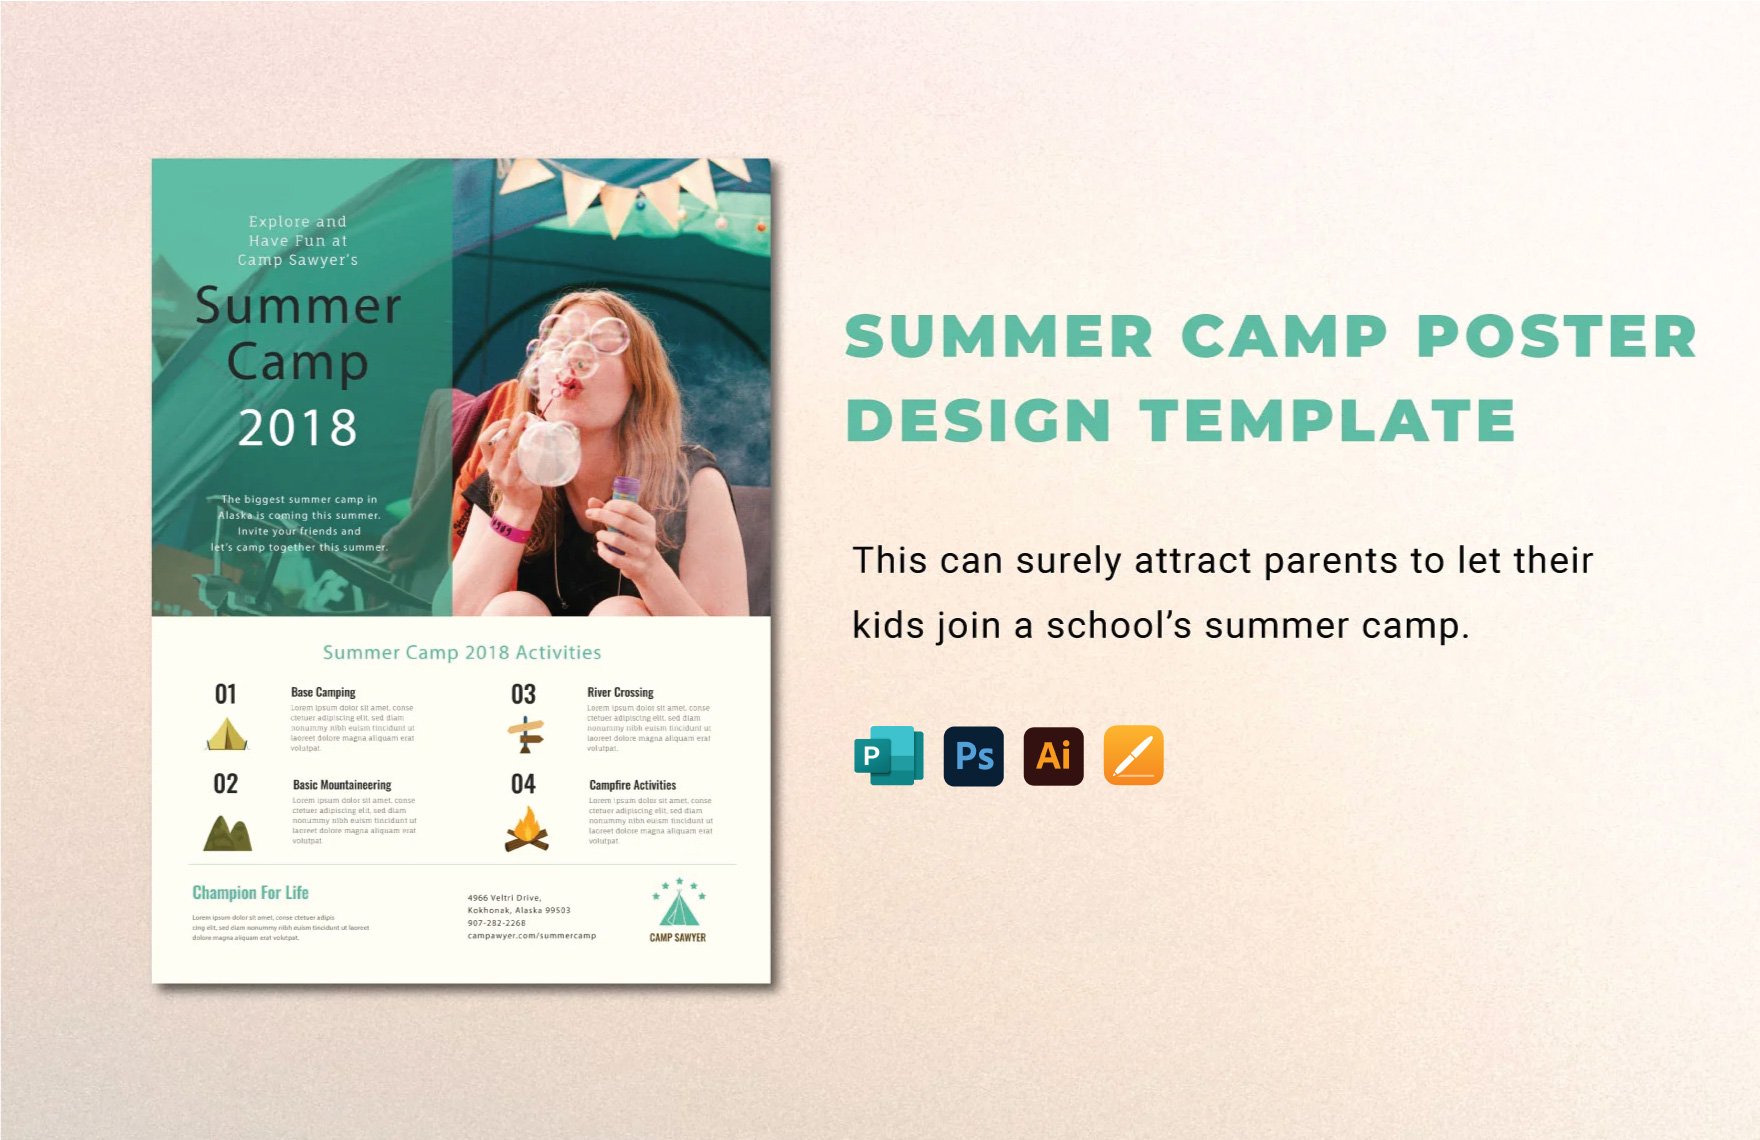 Summer Camp Poster Design Template